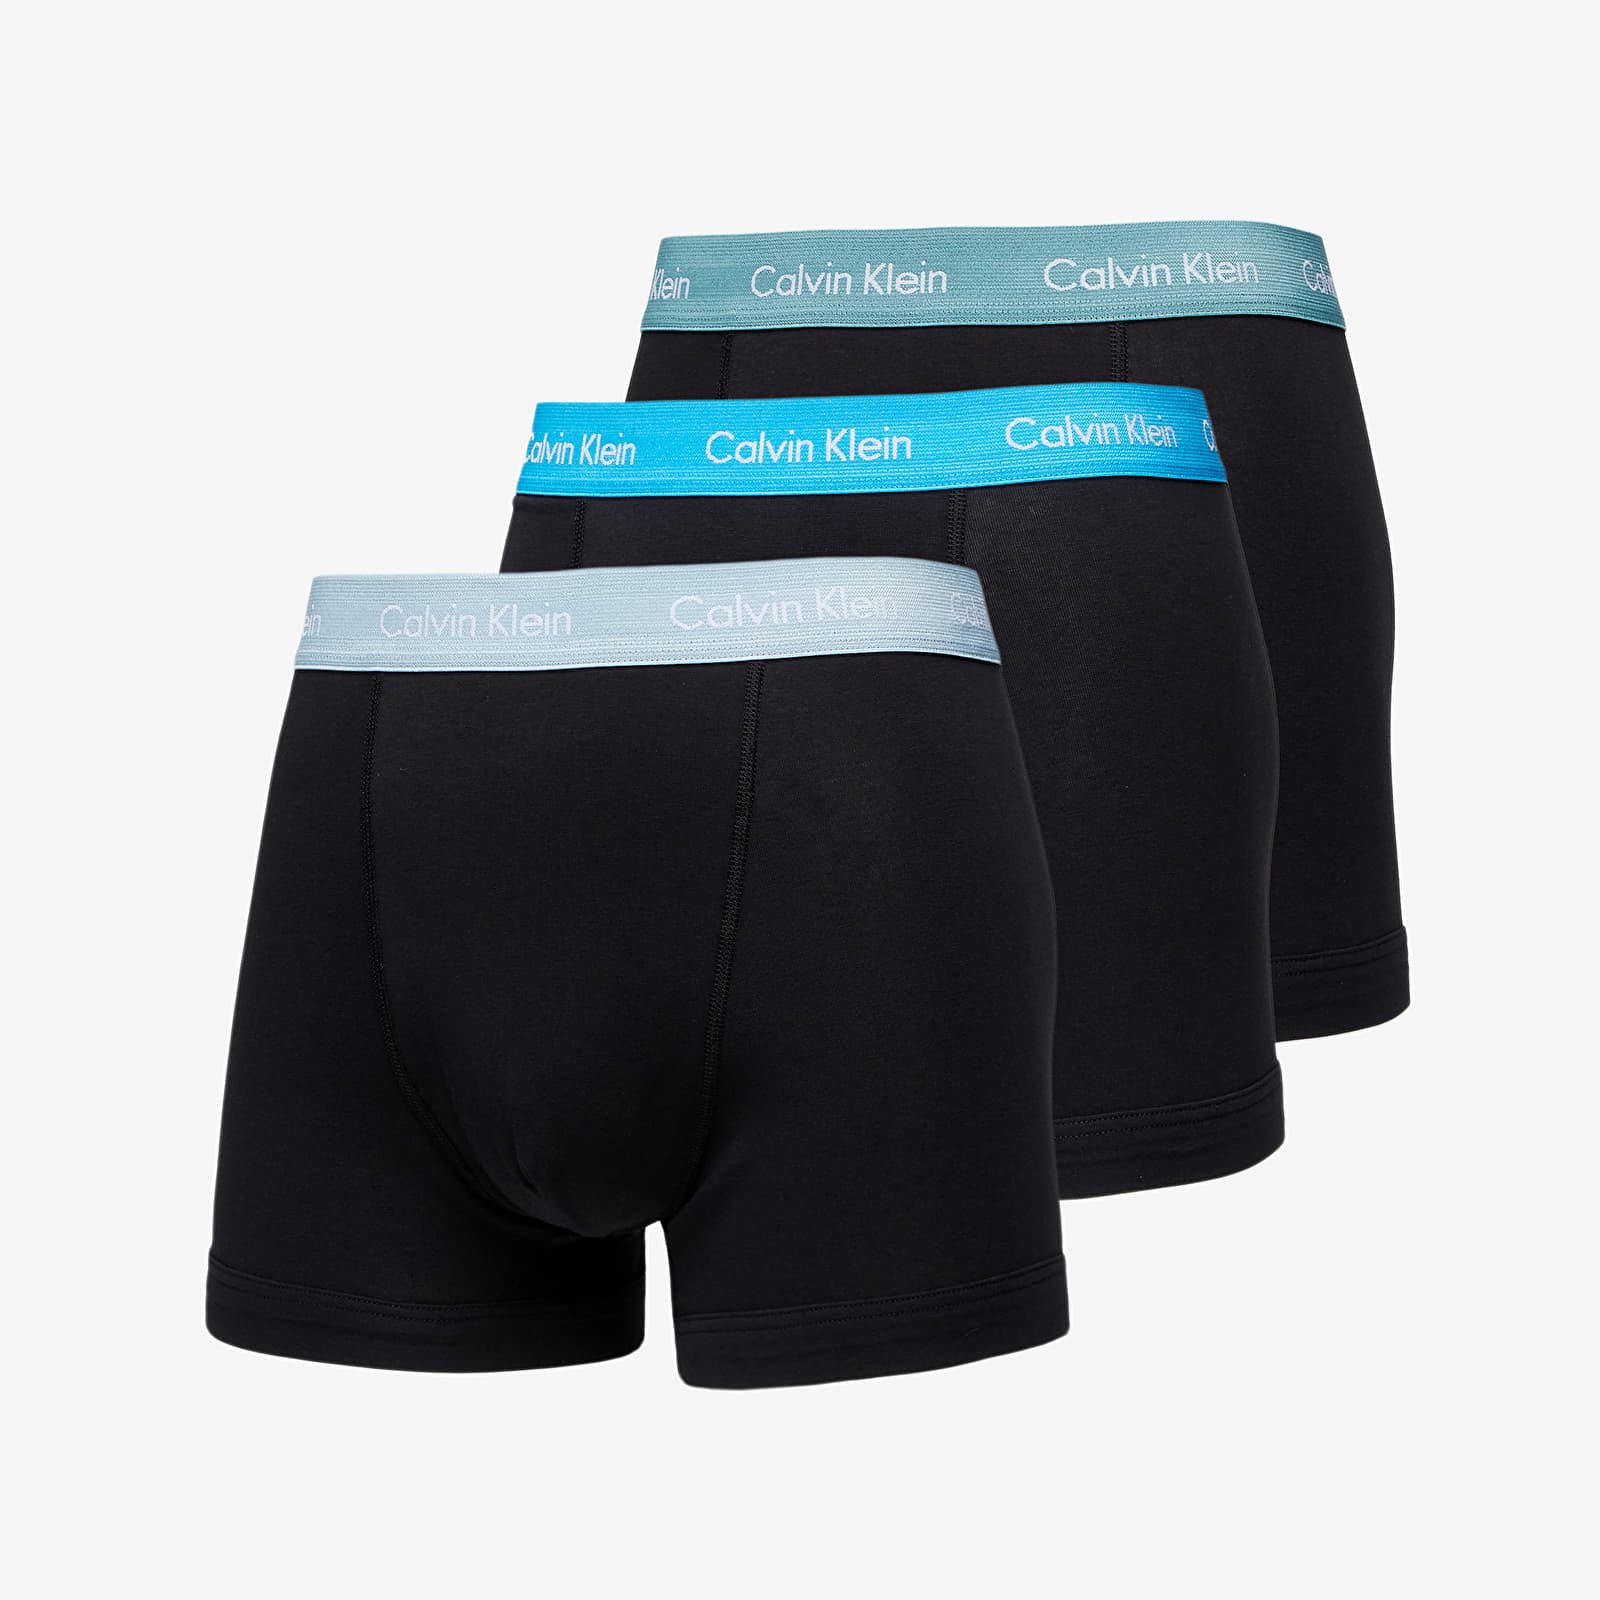 Boxer shorts Calvin Klein Cotton Stretch Classic Fit Trunks 3-Pack Black